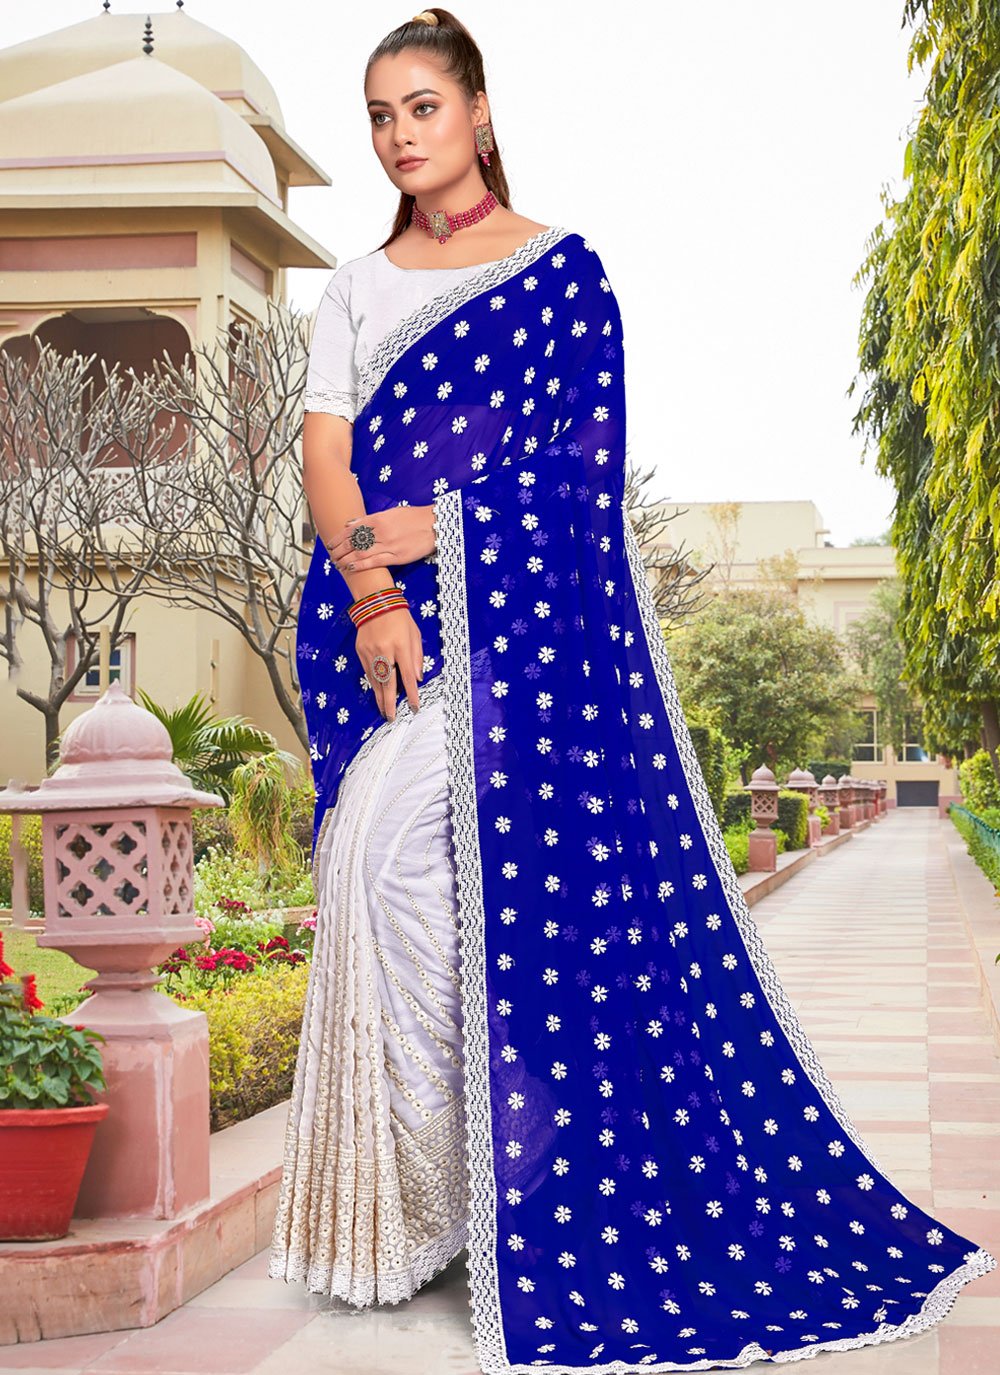 Buy Off White With Blue Color Golden Jari Jacquard Border Saree | keerramnx